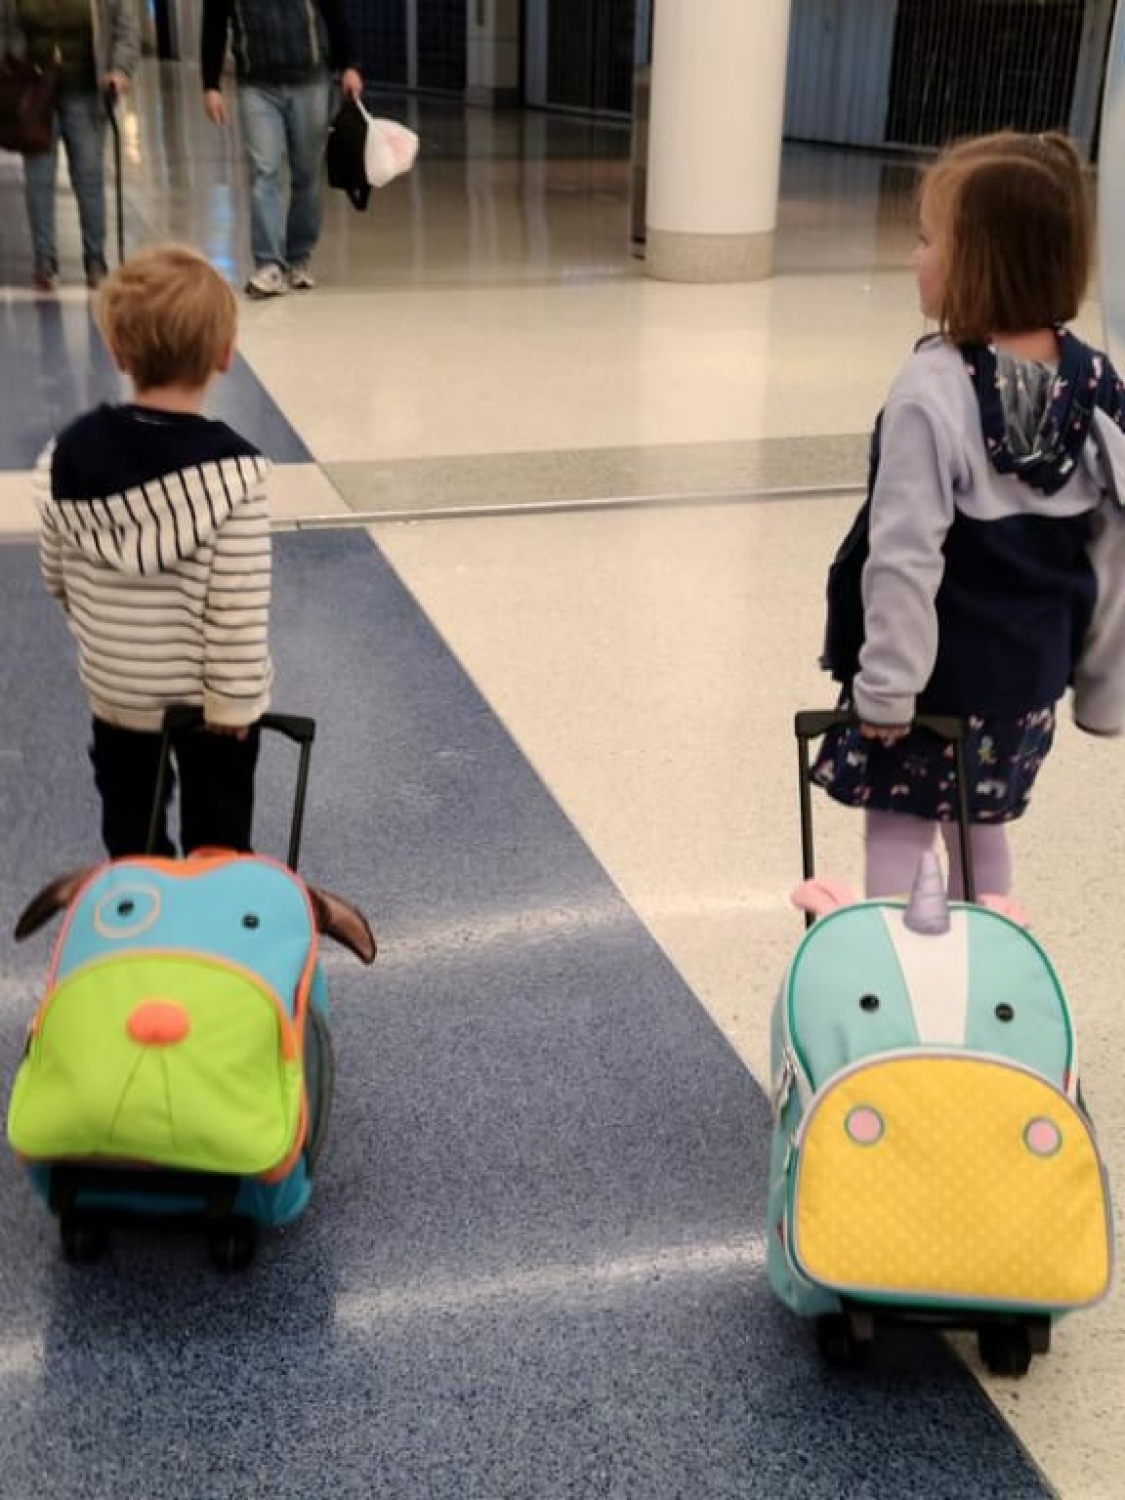 Grab Carrying Handle Skip Hop Kids Zoo Travel Blanket LADYBUG w/ Easy 